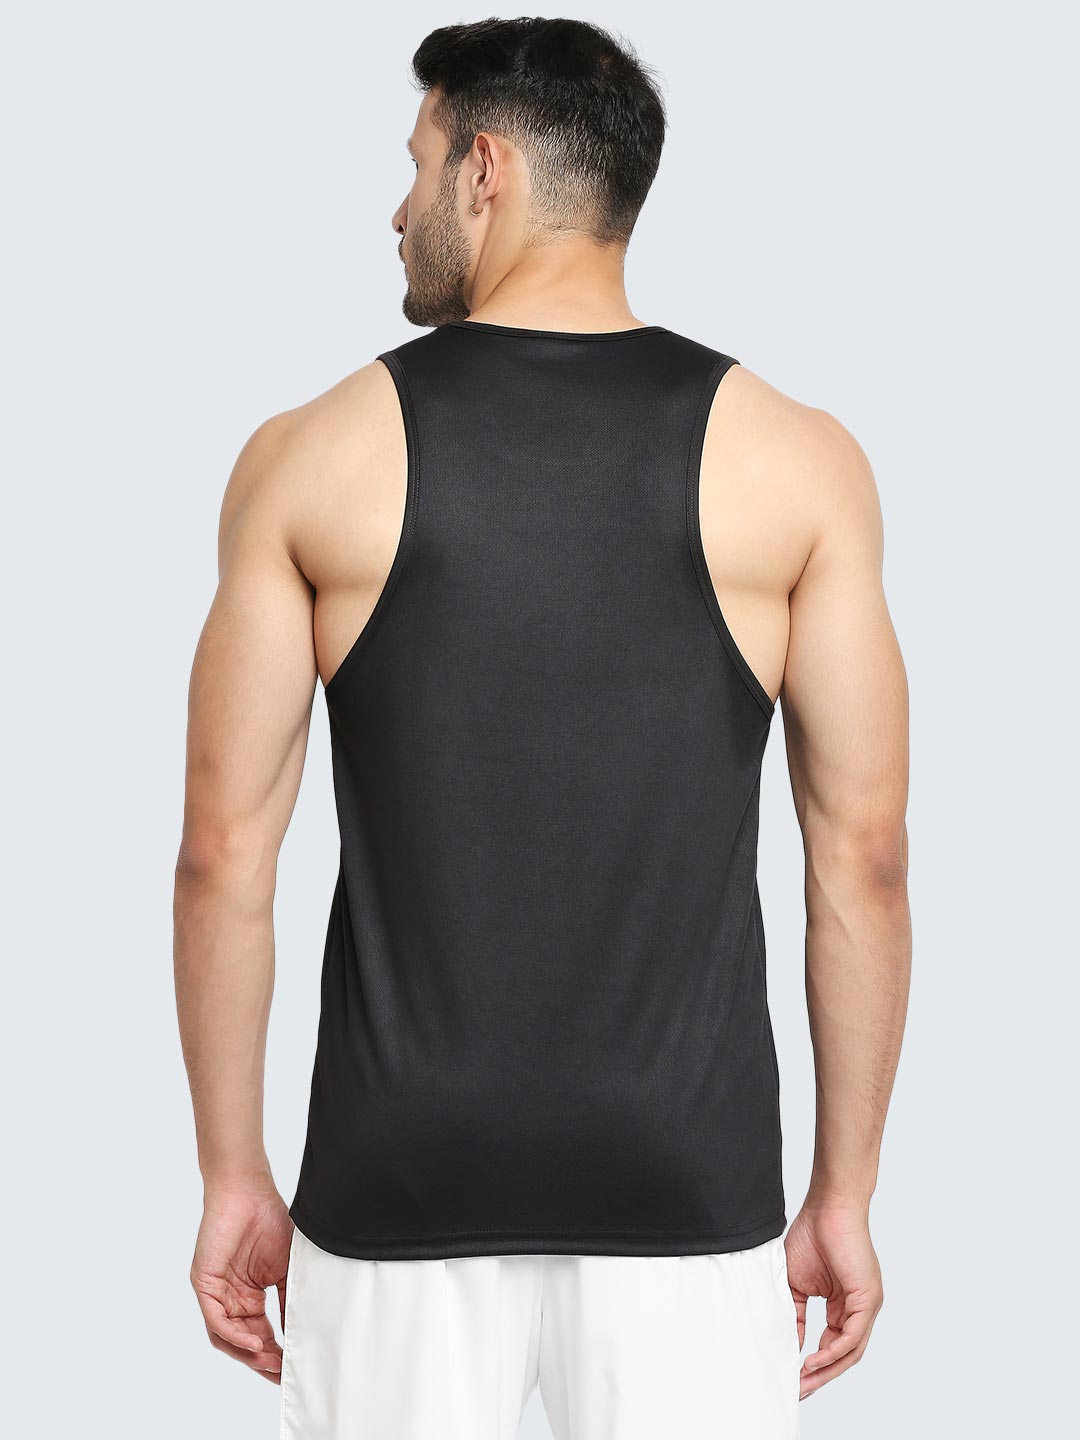 Men's Camouflage Active Gym Vest: Black